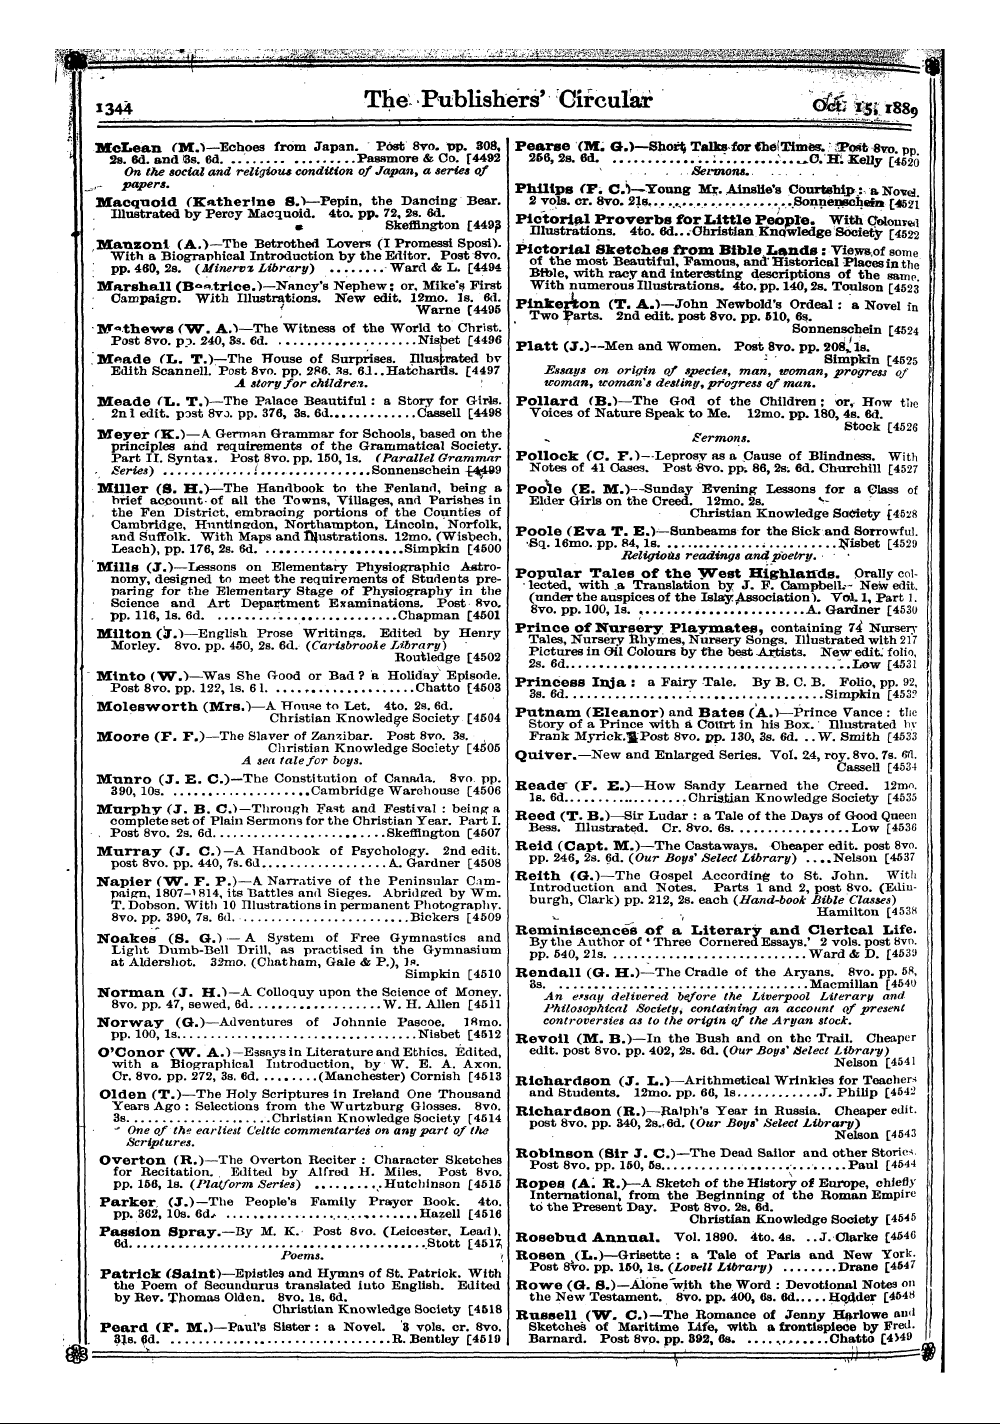 Publishers’ Circular (1880-1890): jS F Y, 1st edition: 26